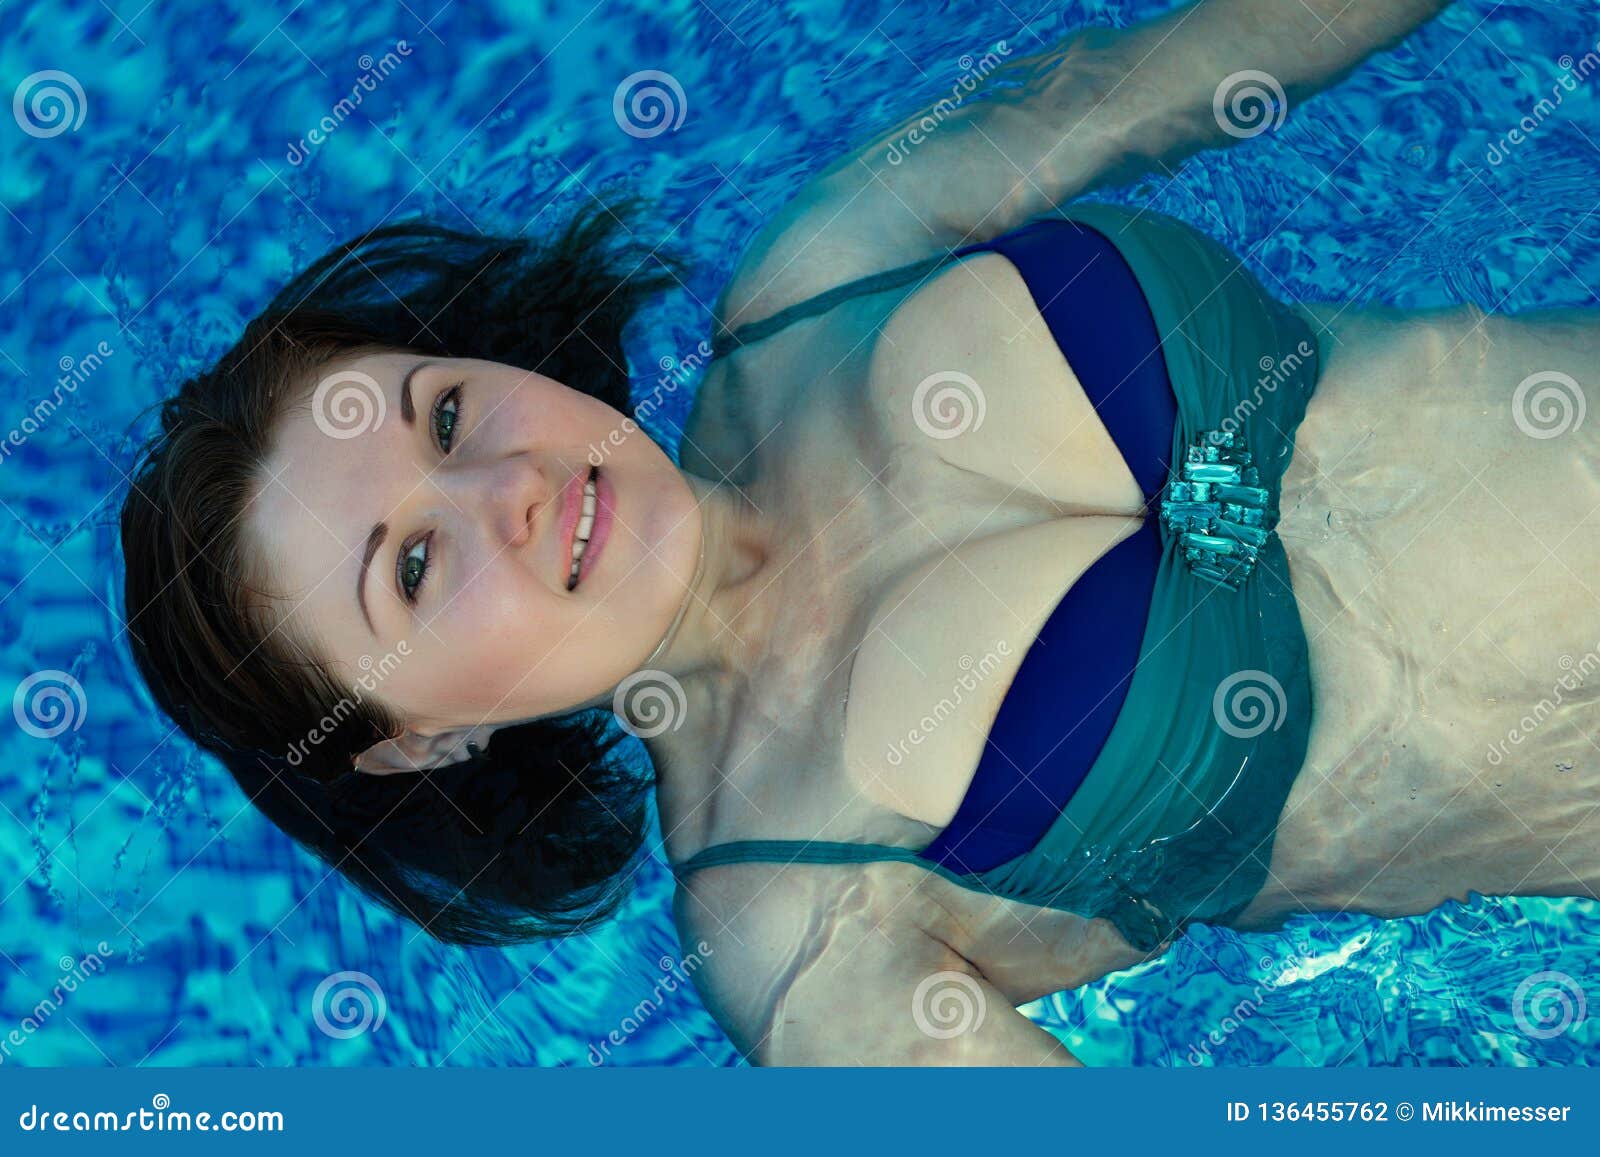 https://thumbs.dreamstime.com/z/smiling-woman-loose-hair-swimming-backstroke-bi-color-bikini-swimsuit-portrait-fit-pool-water-activity-fitness-136455762.jpg